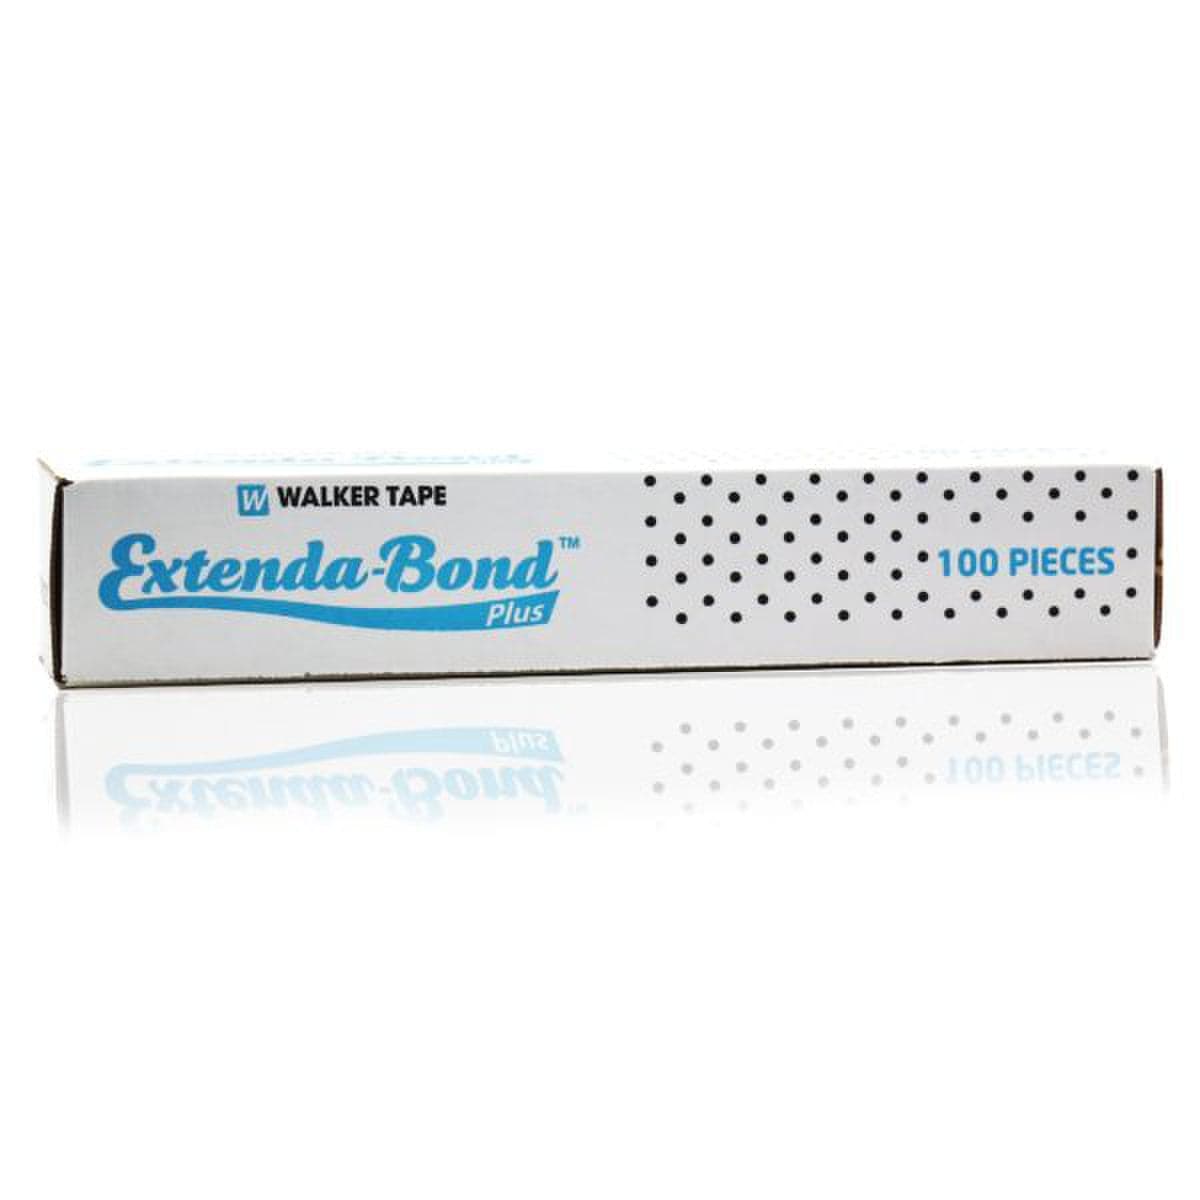 Walker Tape - Extenda-Bond Plus - VIP Extensions